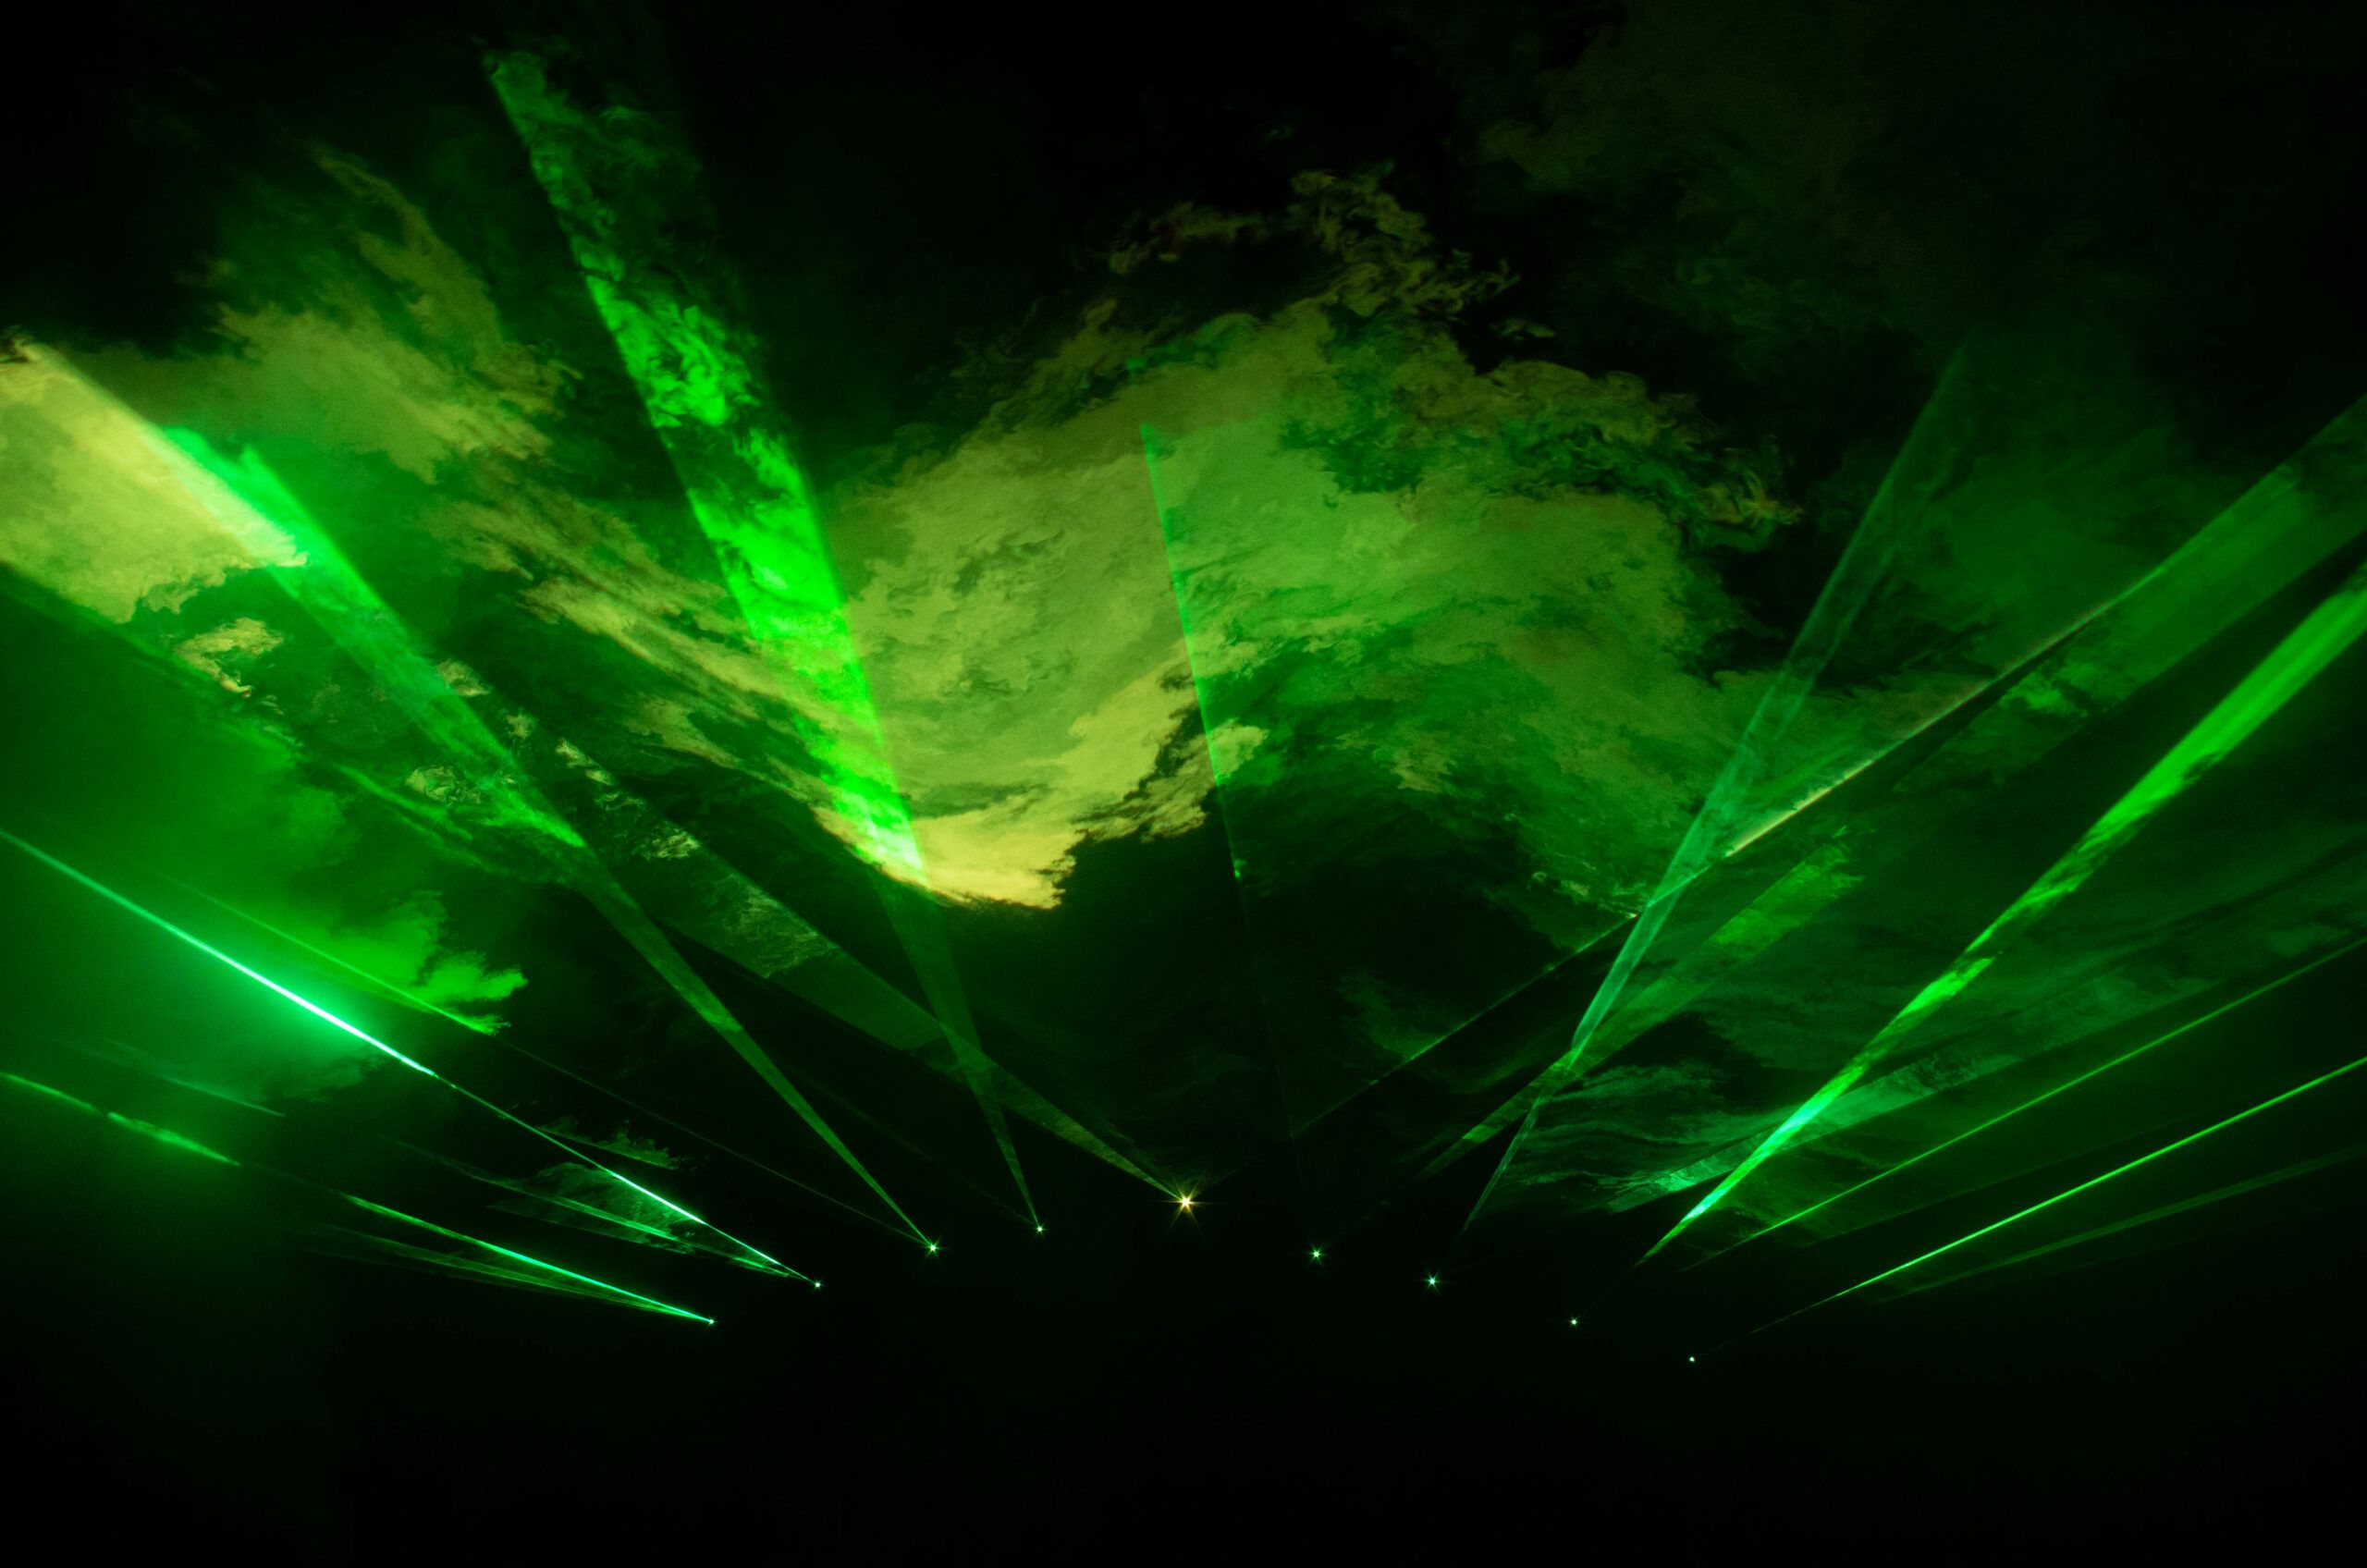 Eco-friendly laser show showing aurora borealis